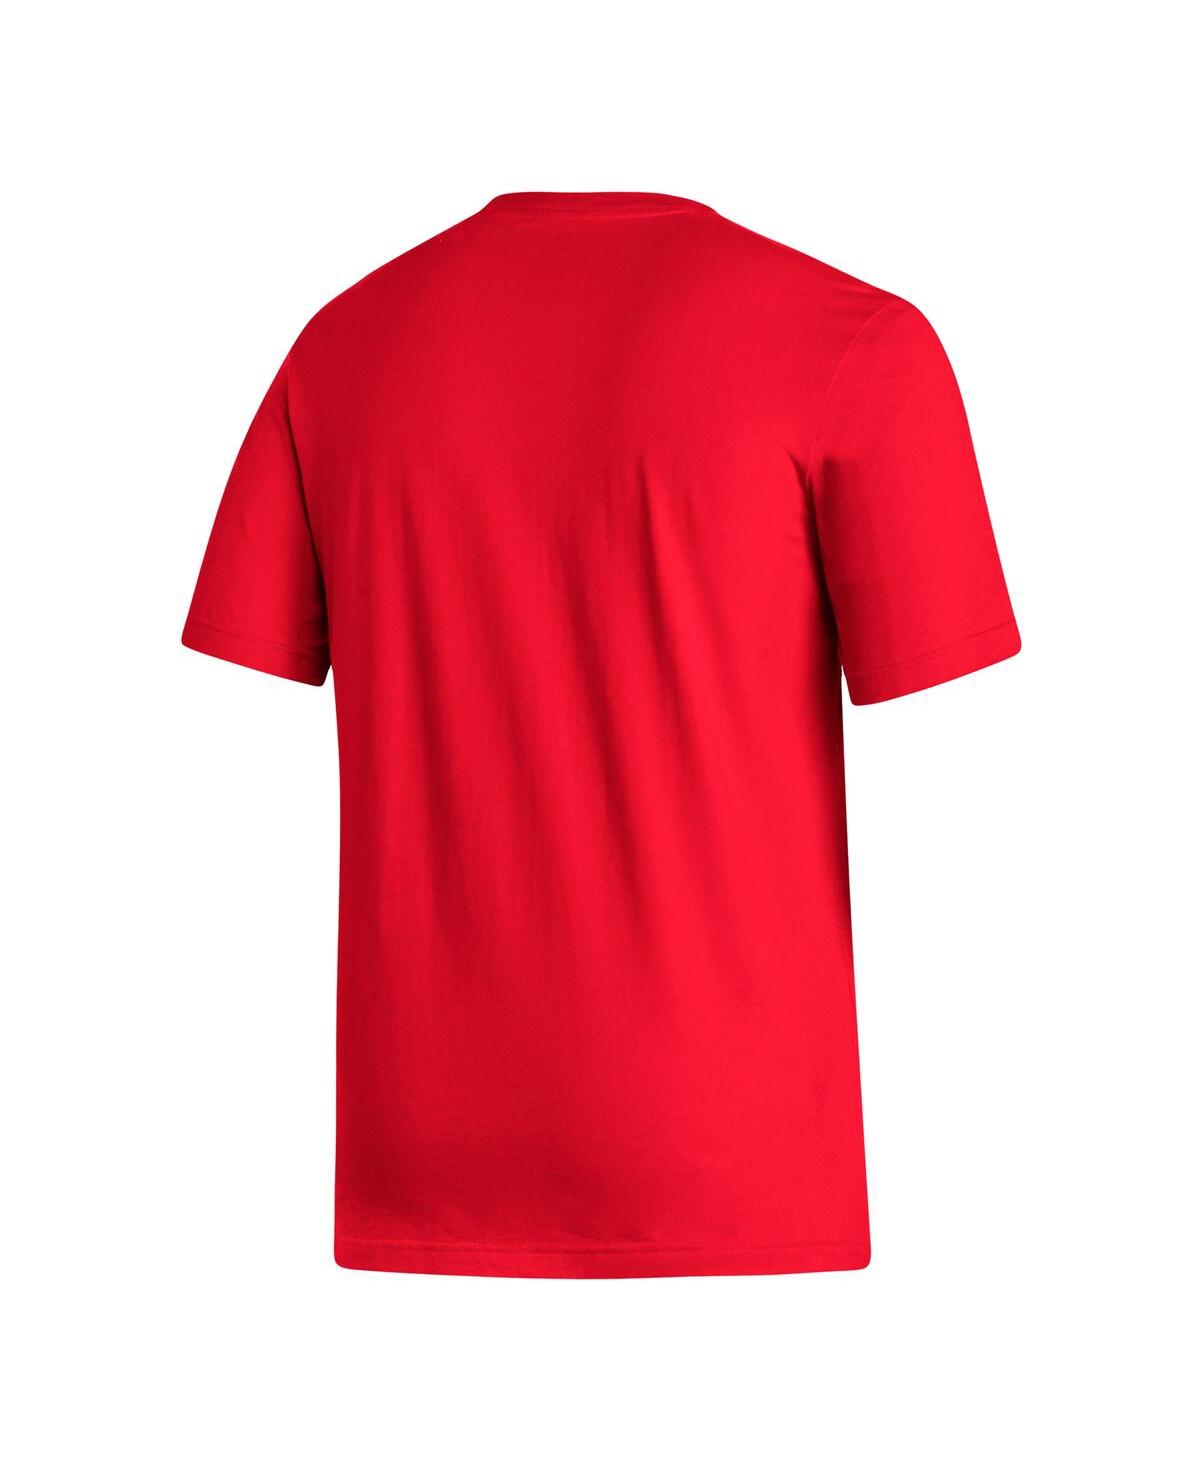 Shop Adidas Originals Men's Adidas Red Arsenal Crest T-shirt